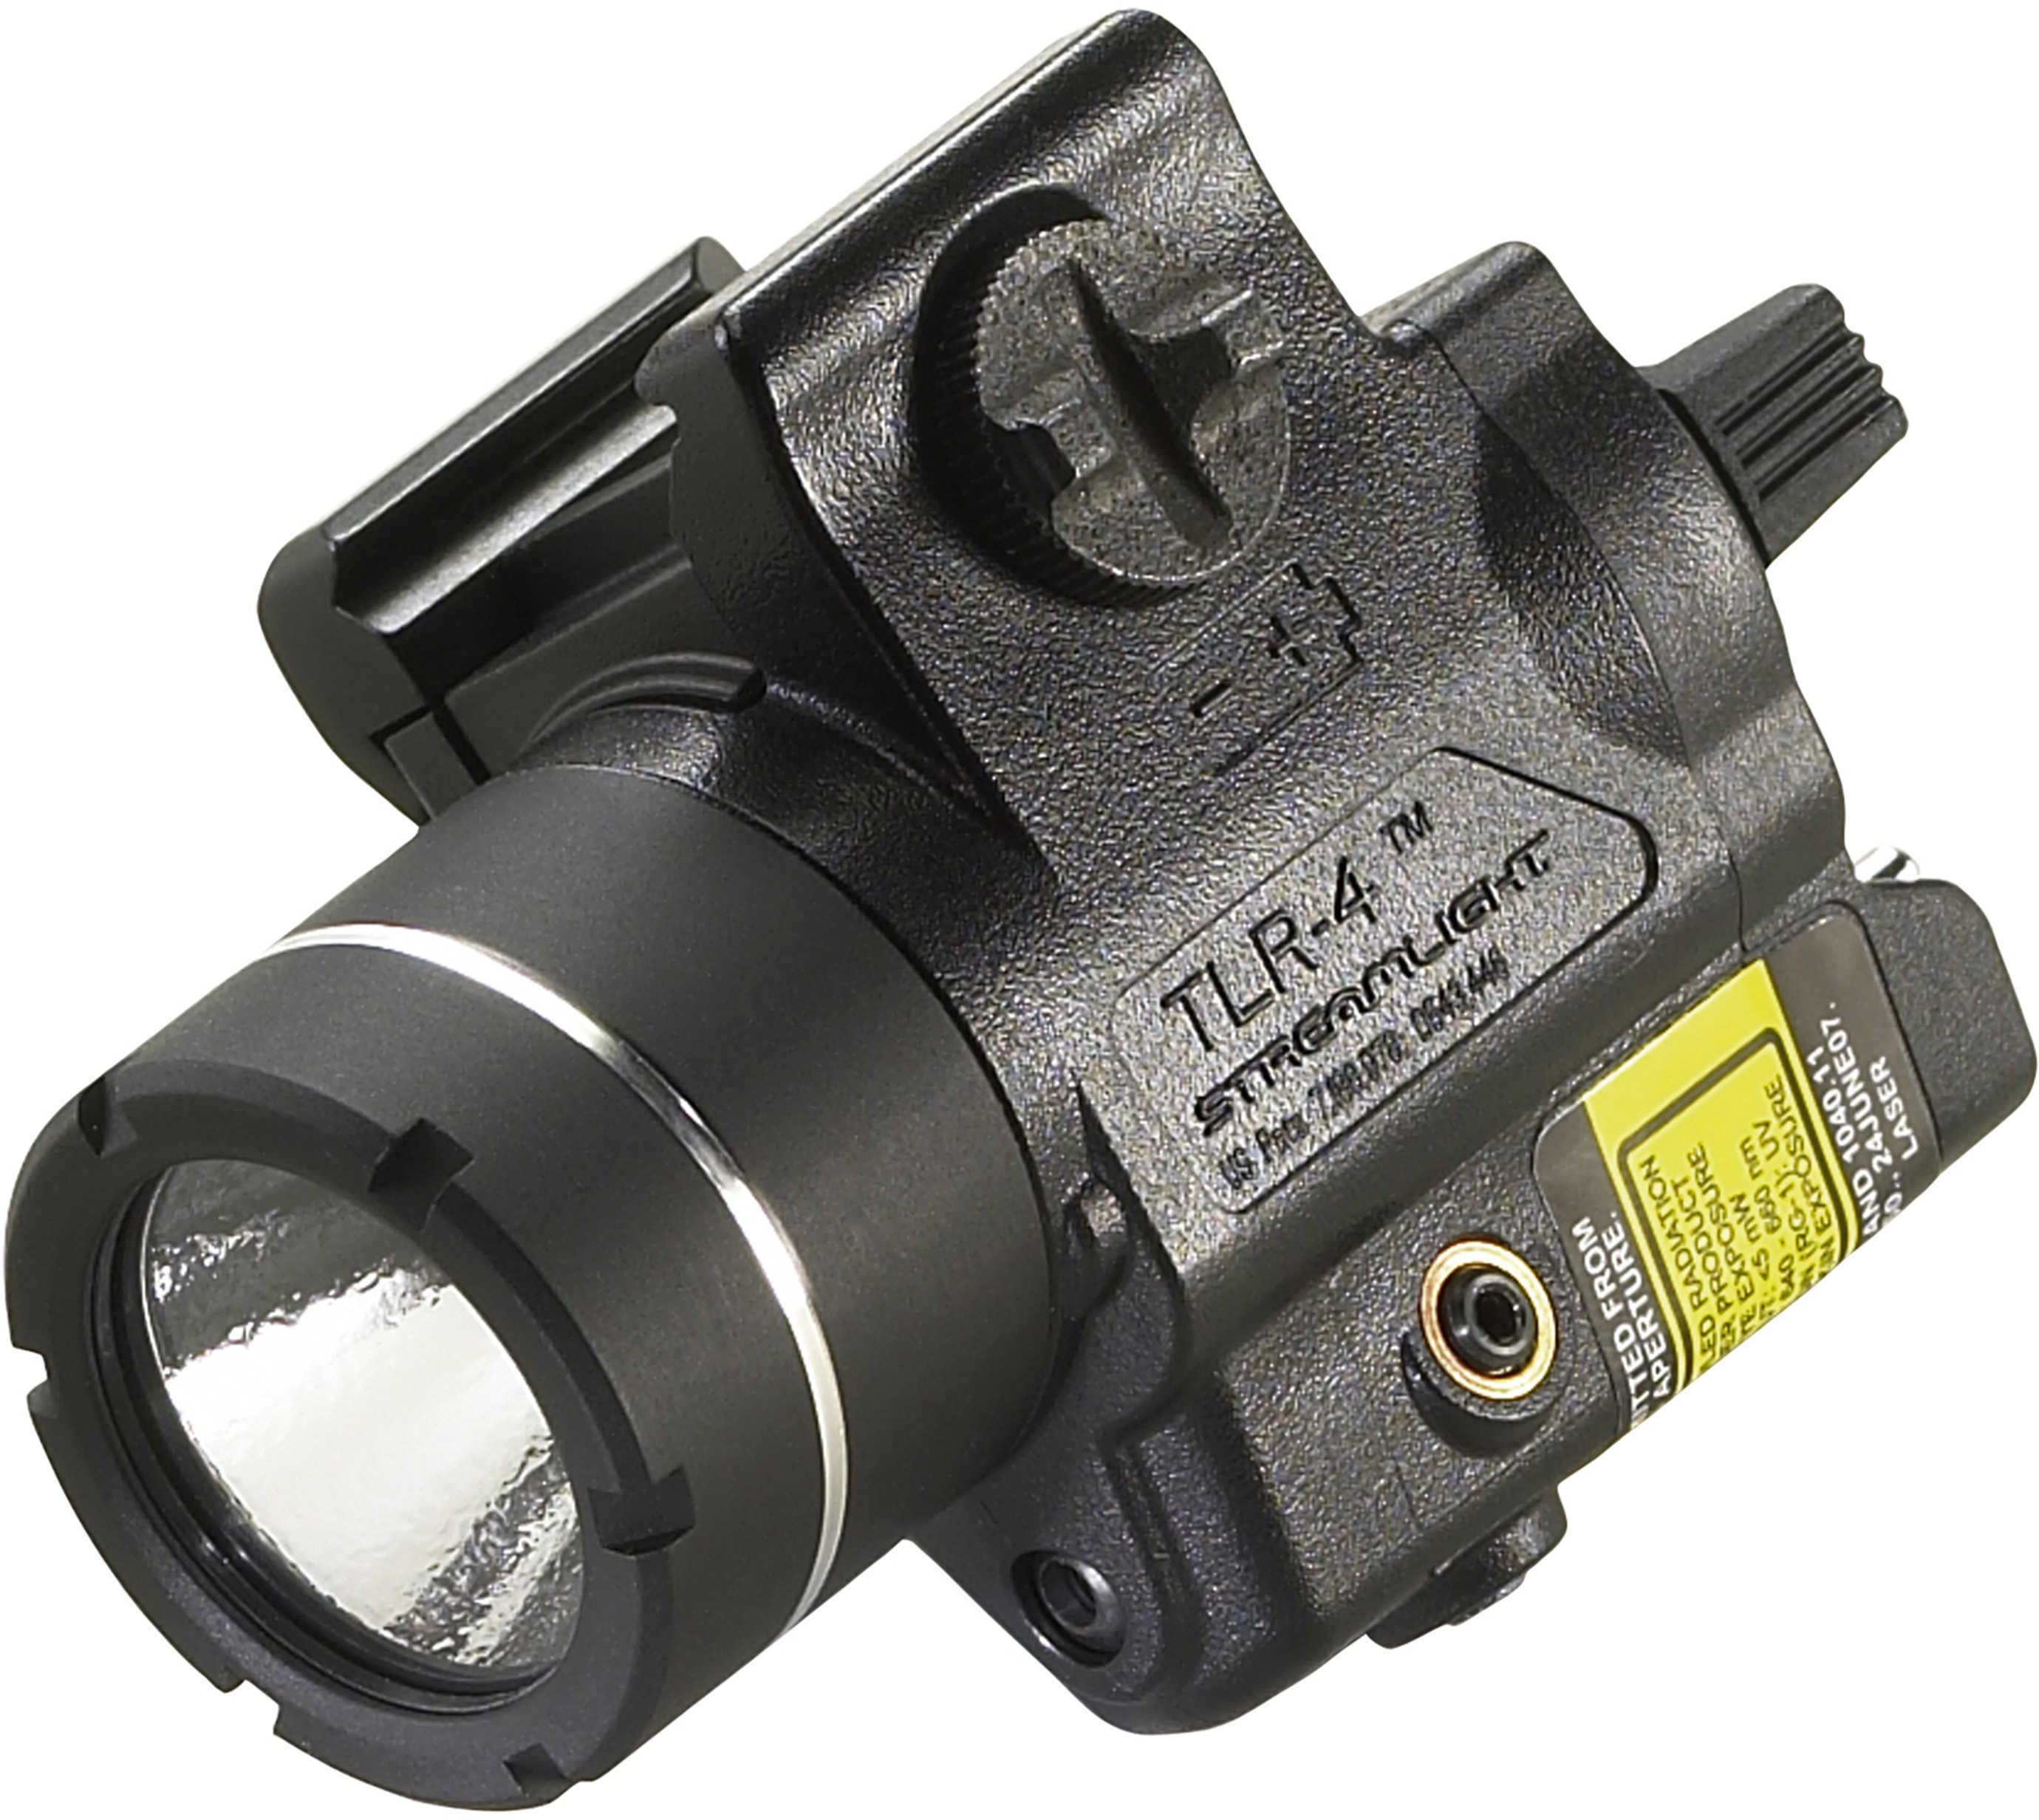 Streamlight TLR-4 Compact Light Laser